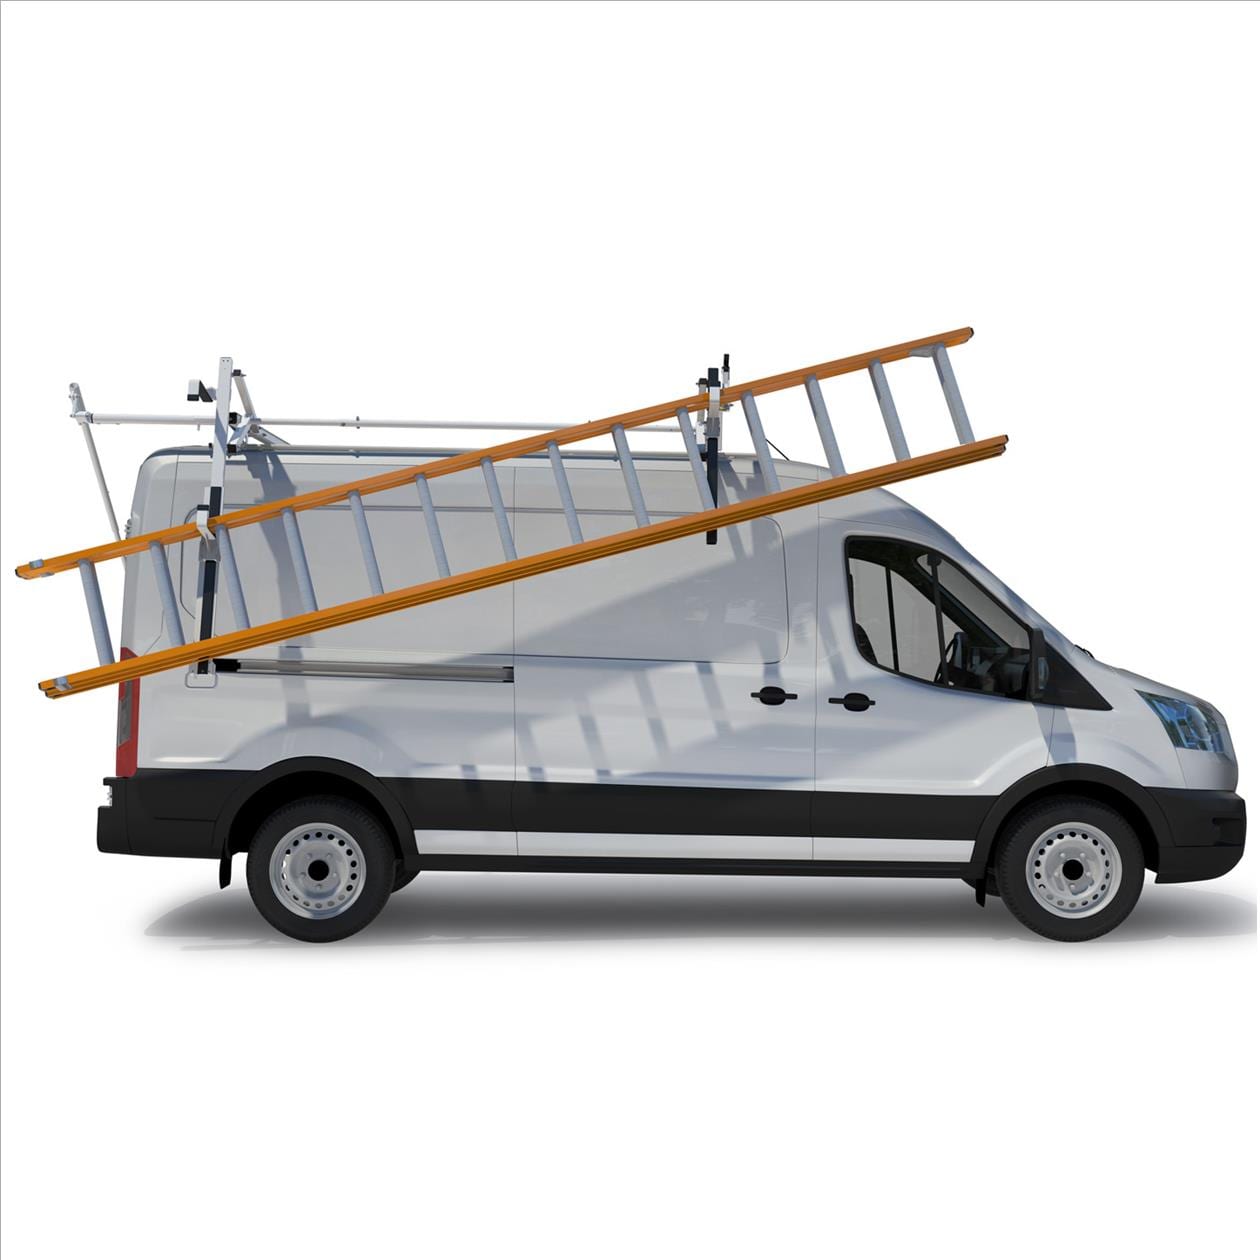 prime-design-ergorack-double-drop-down-rack-for-ford-transit-medium-and-high-roof-vans-u-s-upfitters